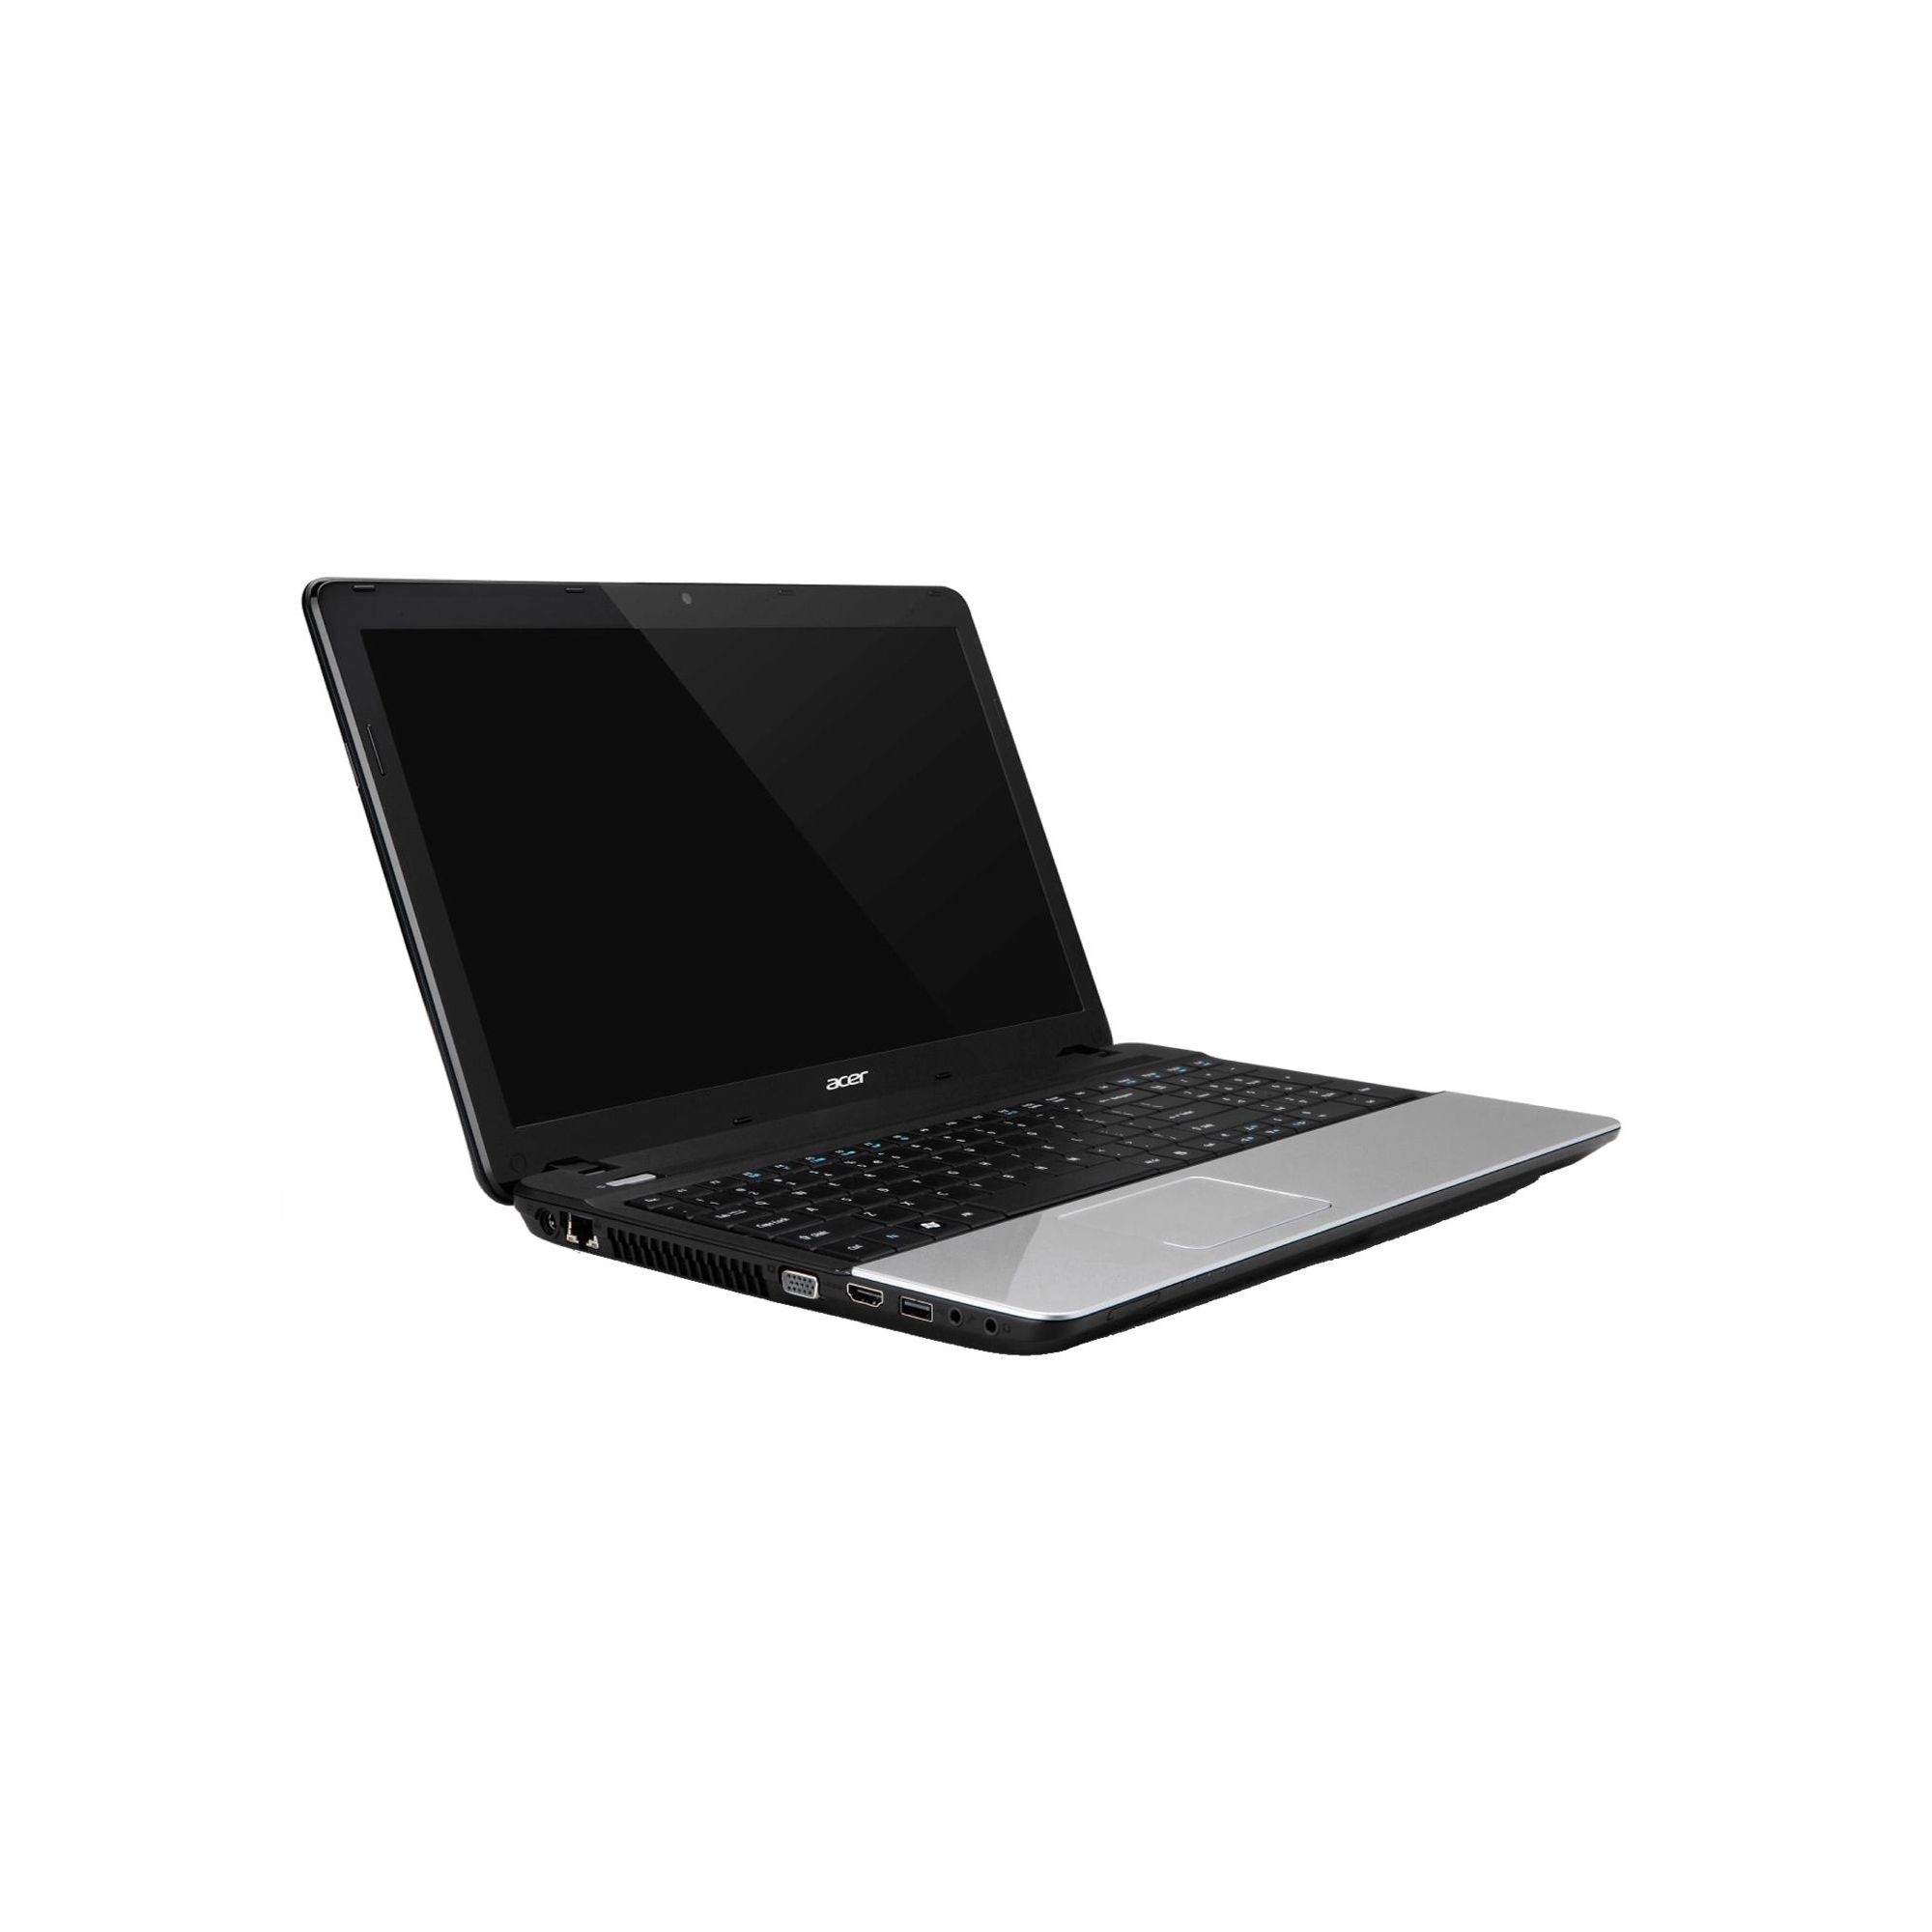 Acer Aspire E1-571-53214G50Mnks (15.6 inch) Notebook PC Core i5 (3210M) 2.5GHz 4GB 500GB DVD-SuperMulti DL WLAN Webcam Windows 8 64-bit (Intel GMA HD) at Tesco Direct